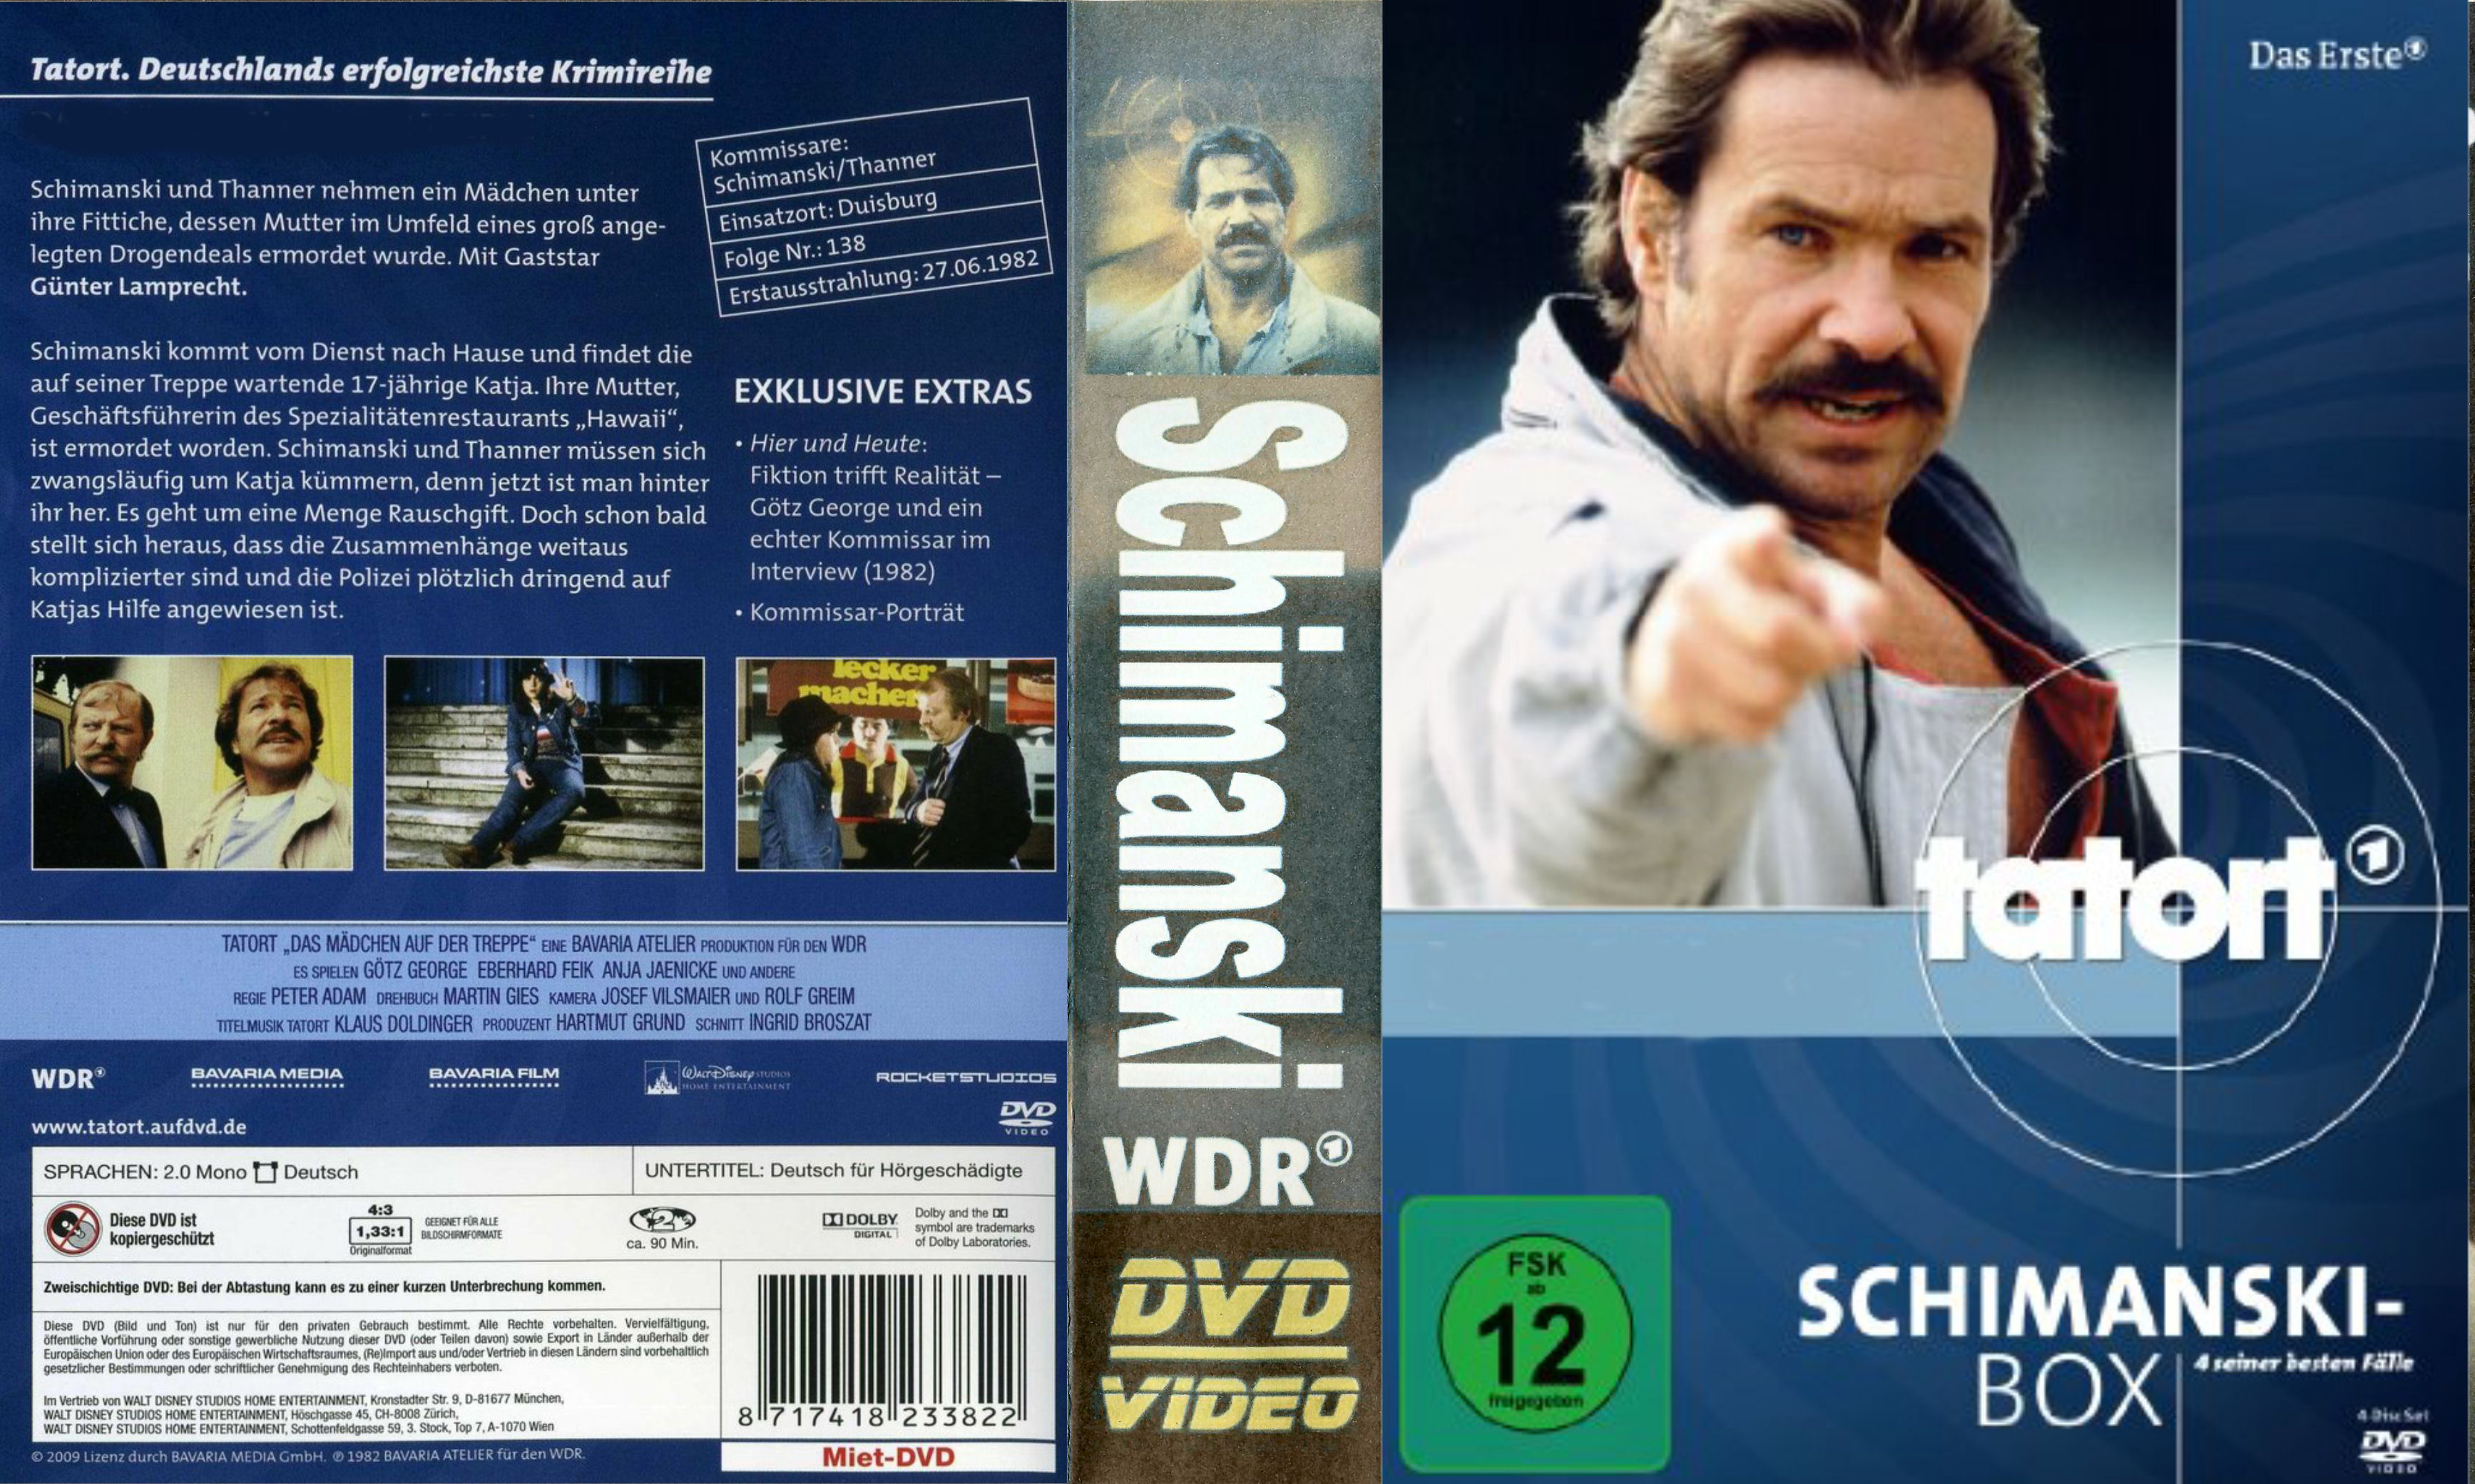 Schimanski Collectie Tatort No Subs - DvD 18